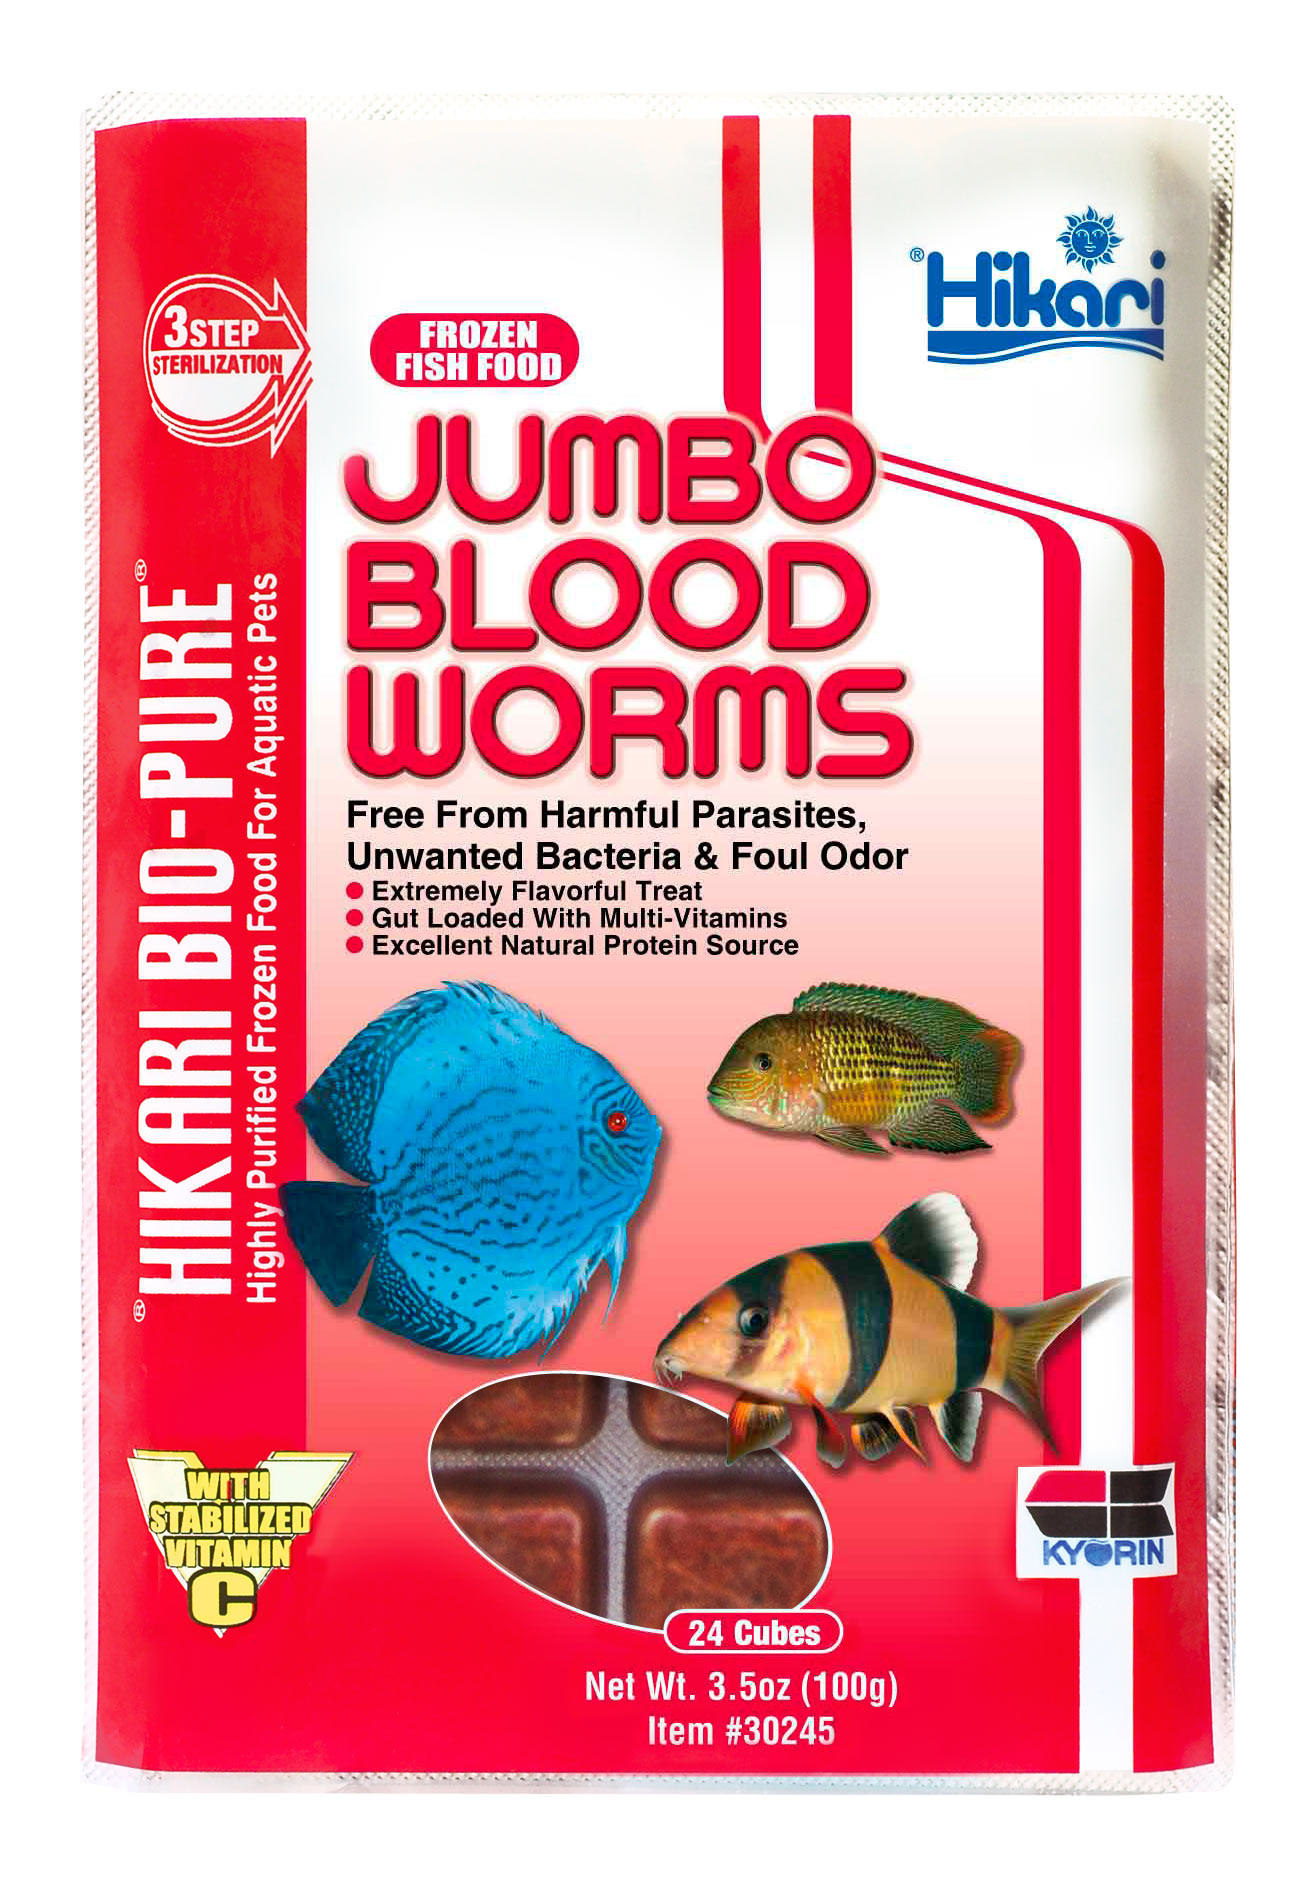 Hikari info : Hikari Bio-Pure FD BLOOD WORMS